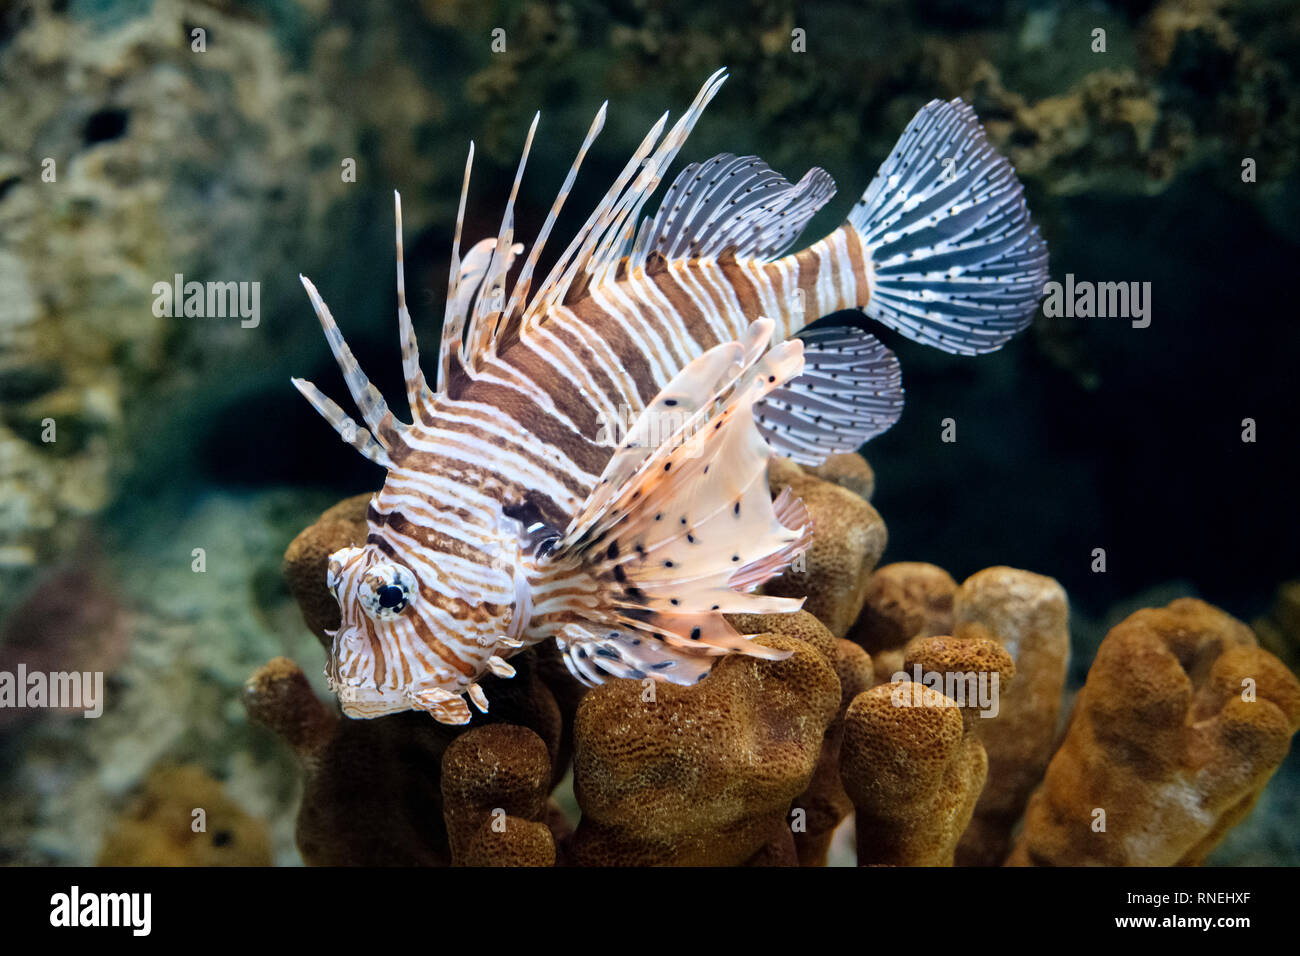 Rotfeuerfisch (Pterois volitans), giftige Korallenriff Fische, Familie Scorpaenidae. Aquarium Stockfoto